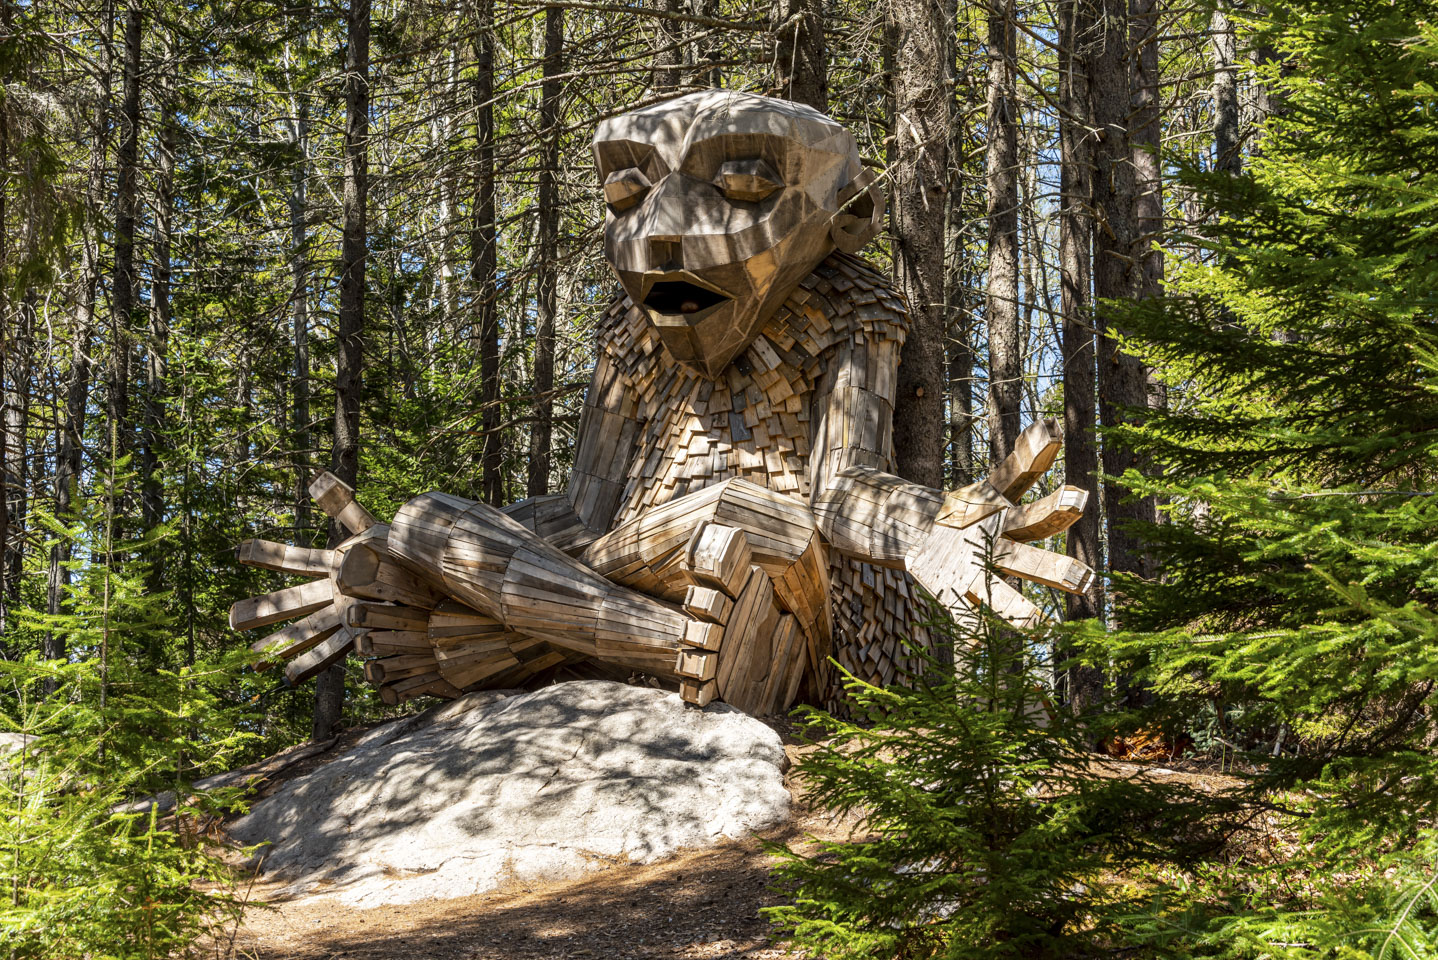 The troll sculpture Gro